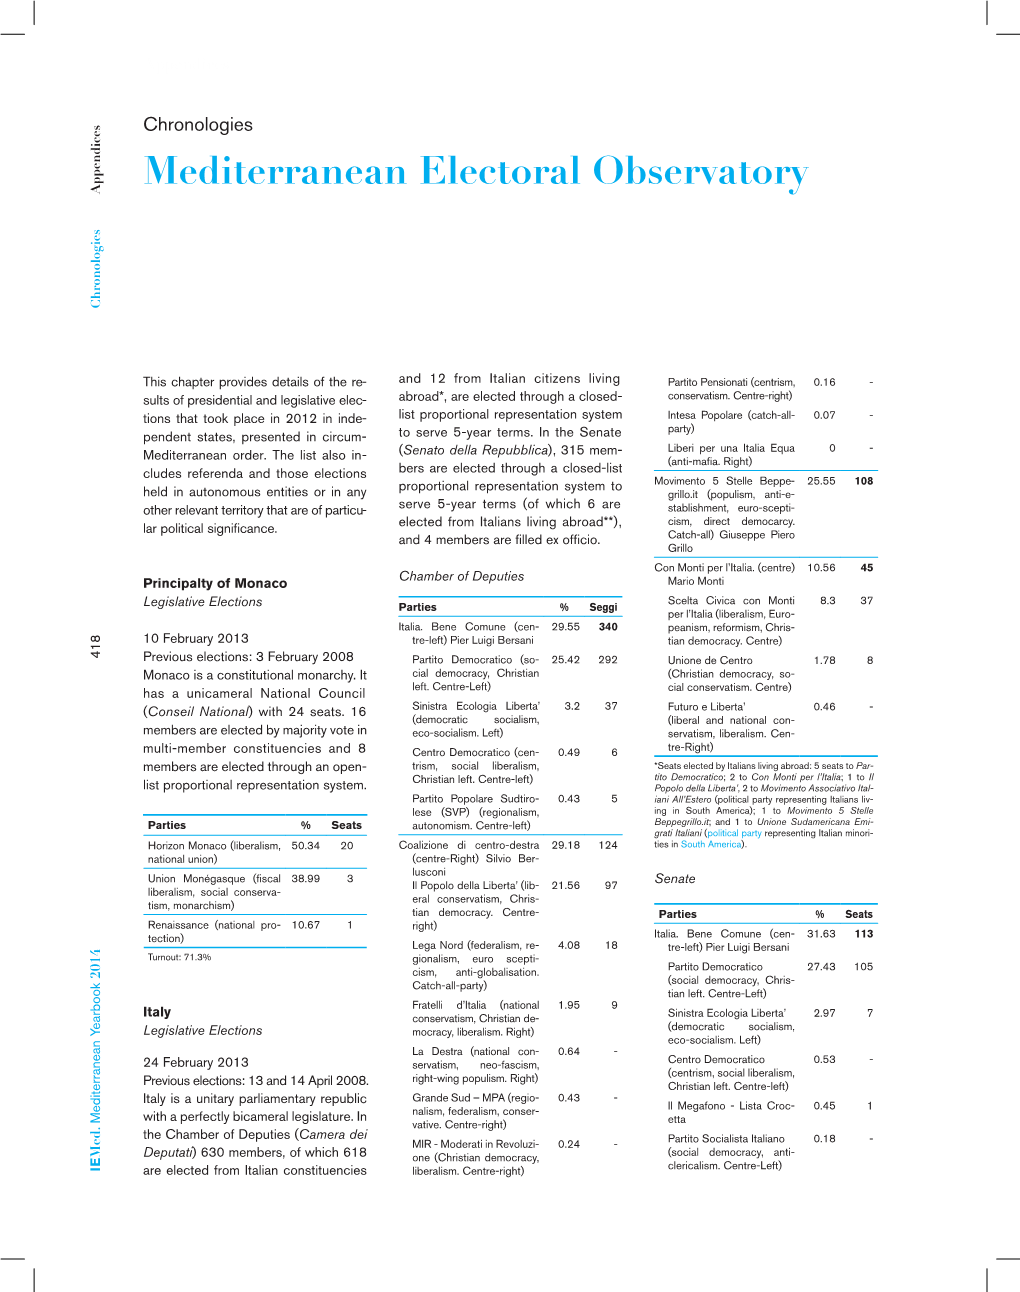 Mediterranean Electoral Observatory